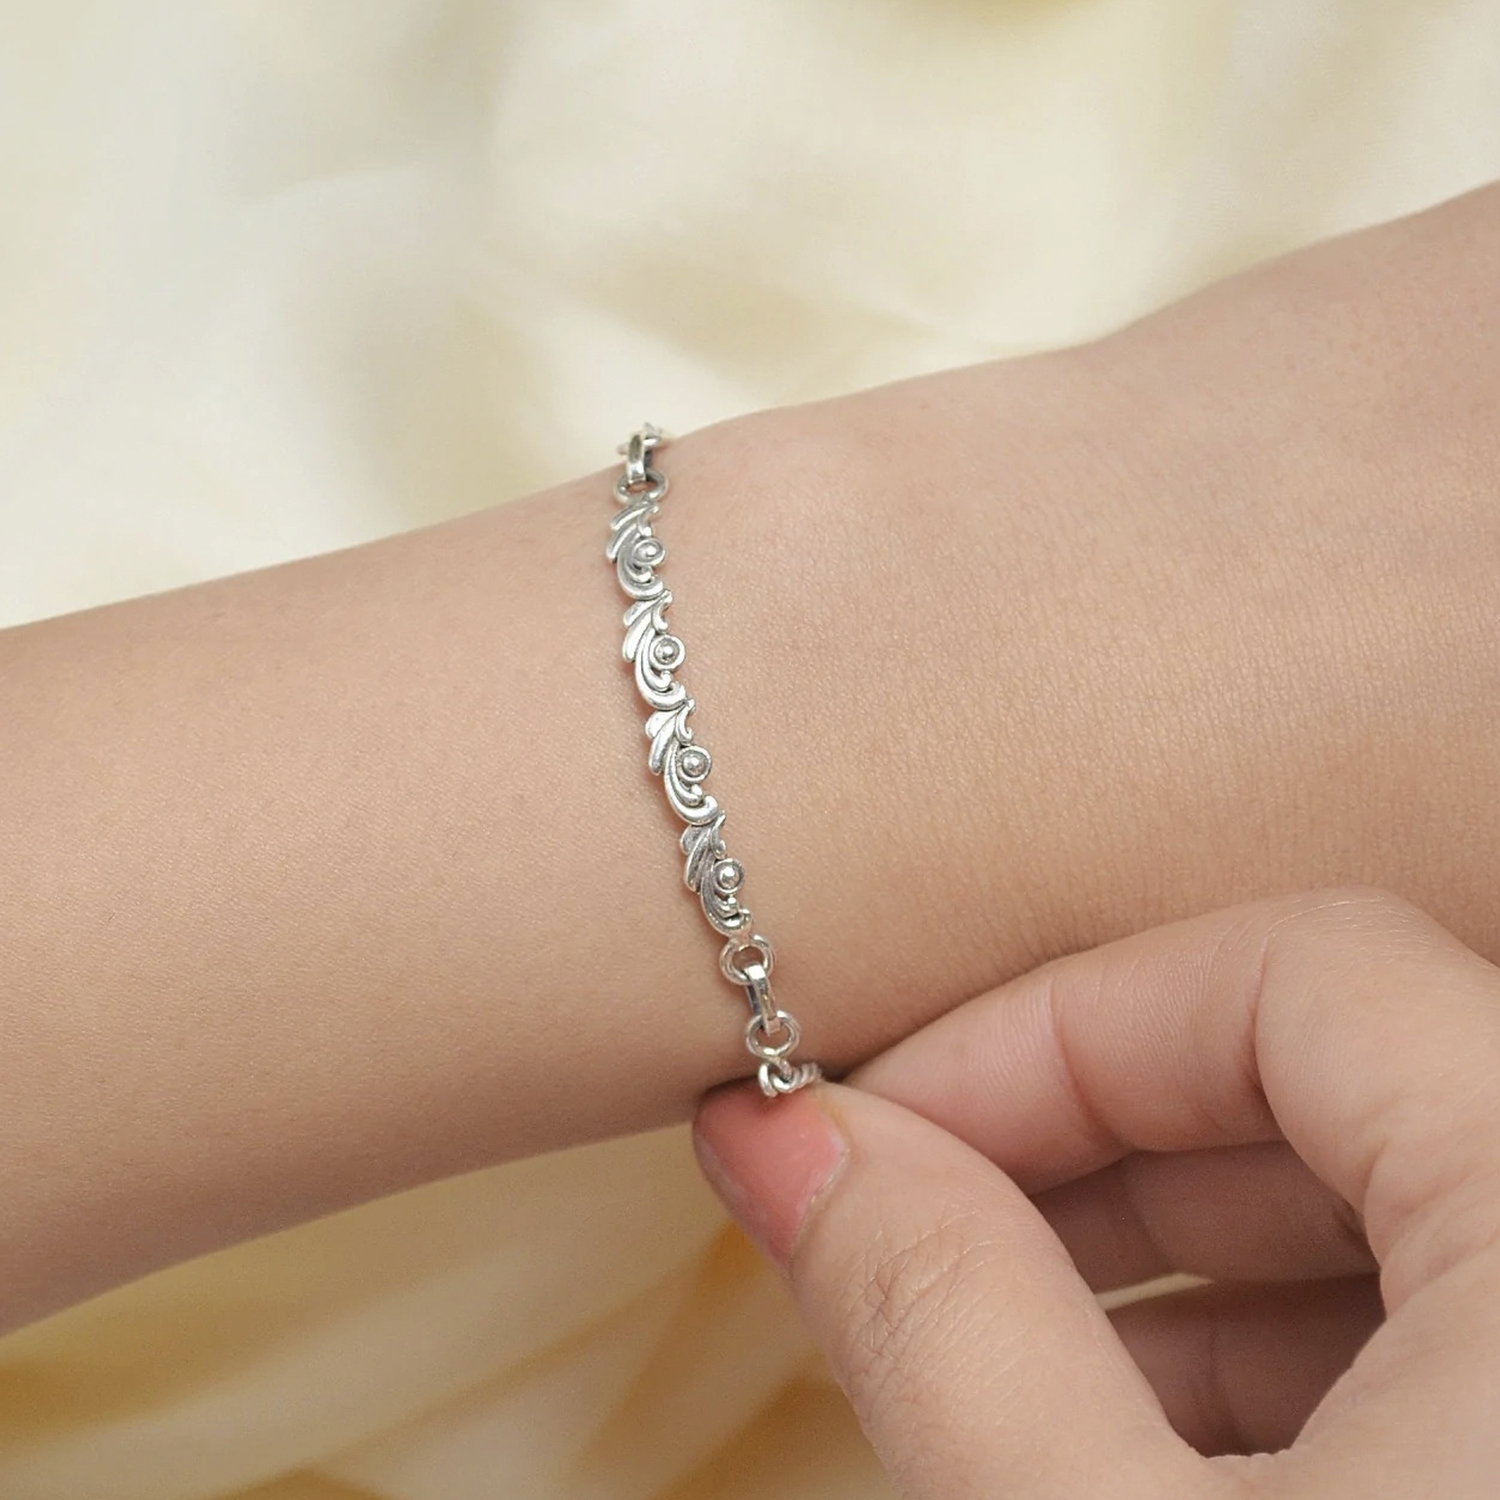 Explore 165+ silver bracelet design